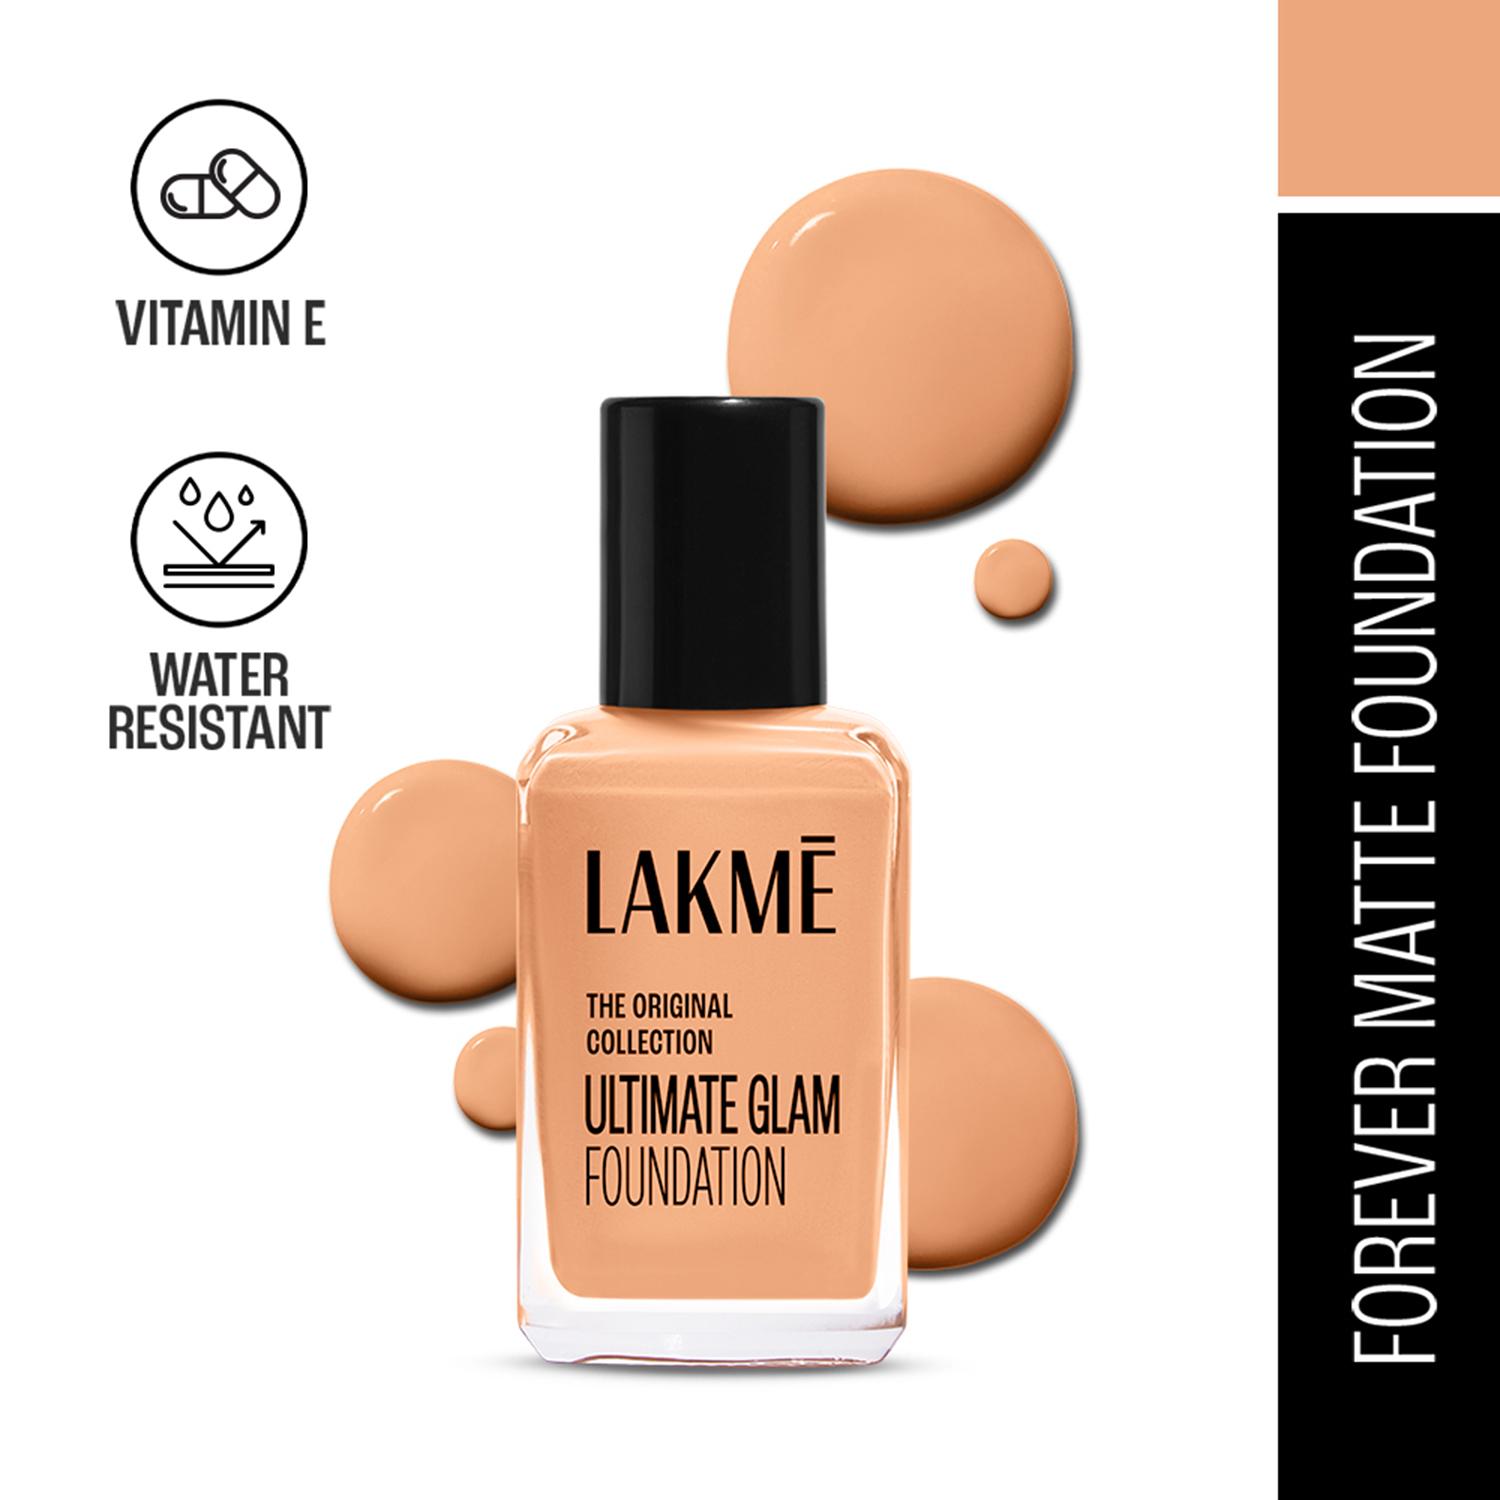 Lakme | Lakme FOREVER MATTE FOUNDATION for Superior Coverage Vit E lightweight & water-resist Shell (27 ml)